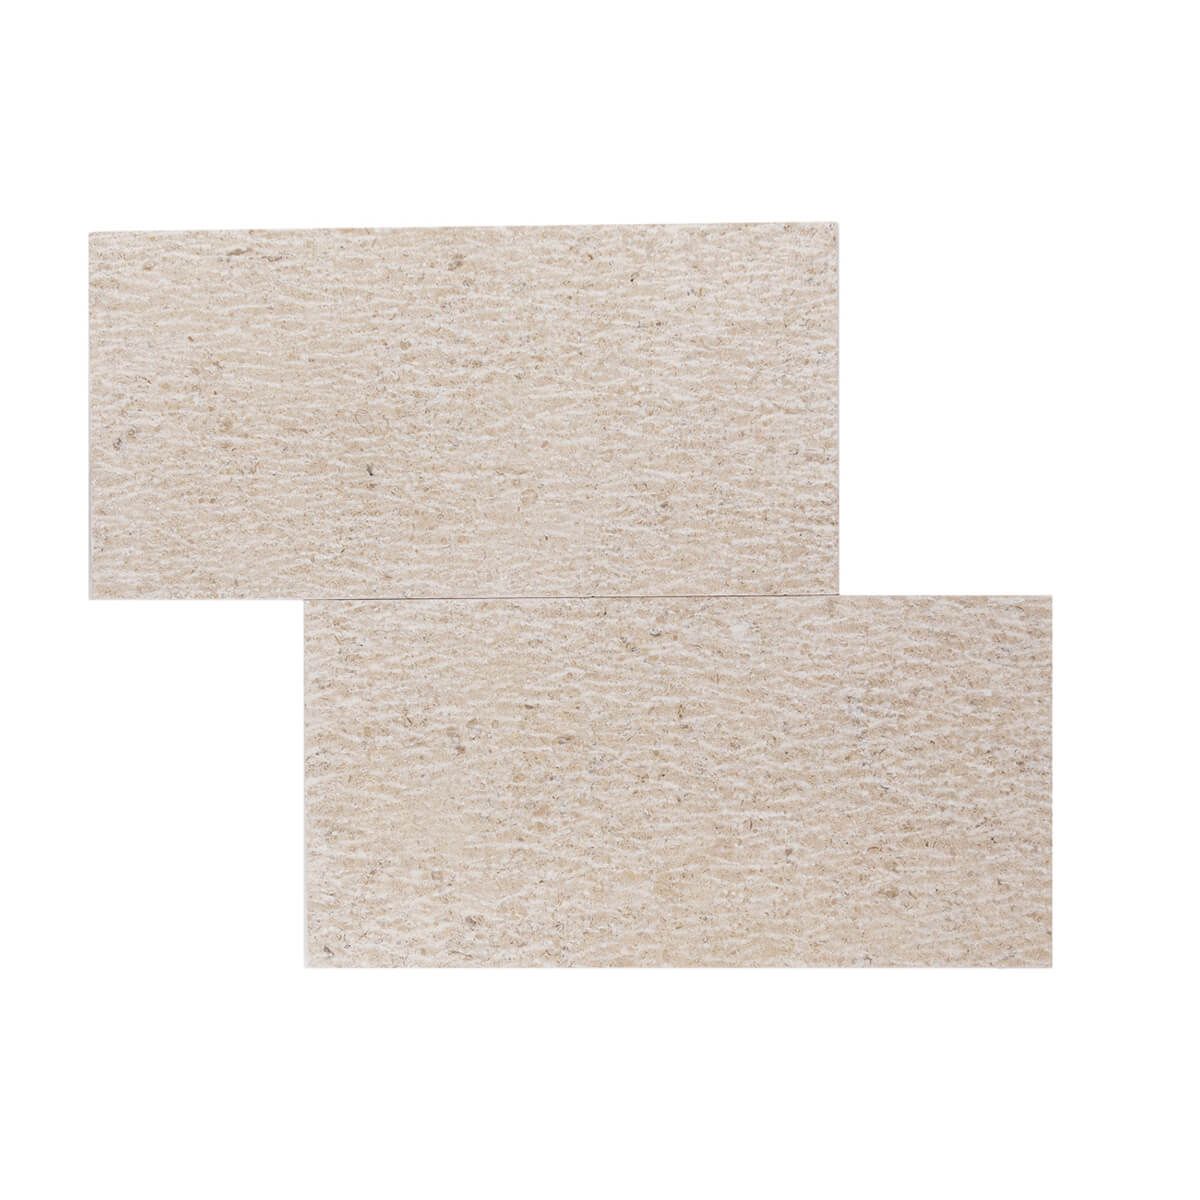 haussmann fonjone gascogne beige limestone rectangle natural stone field tile 6x12 linen